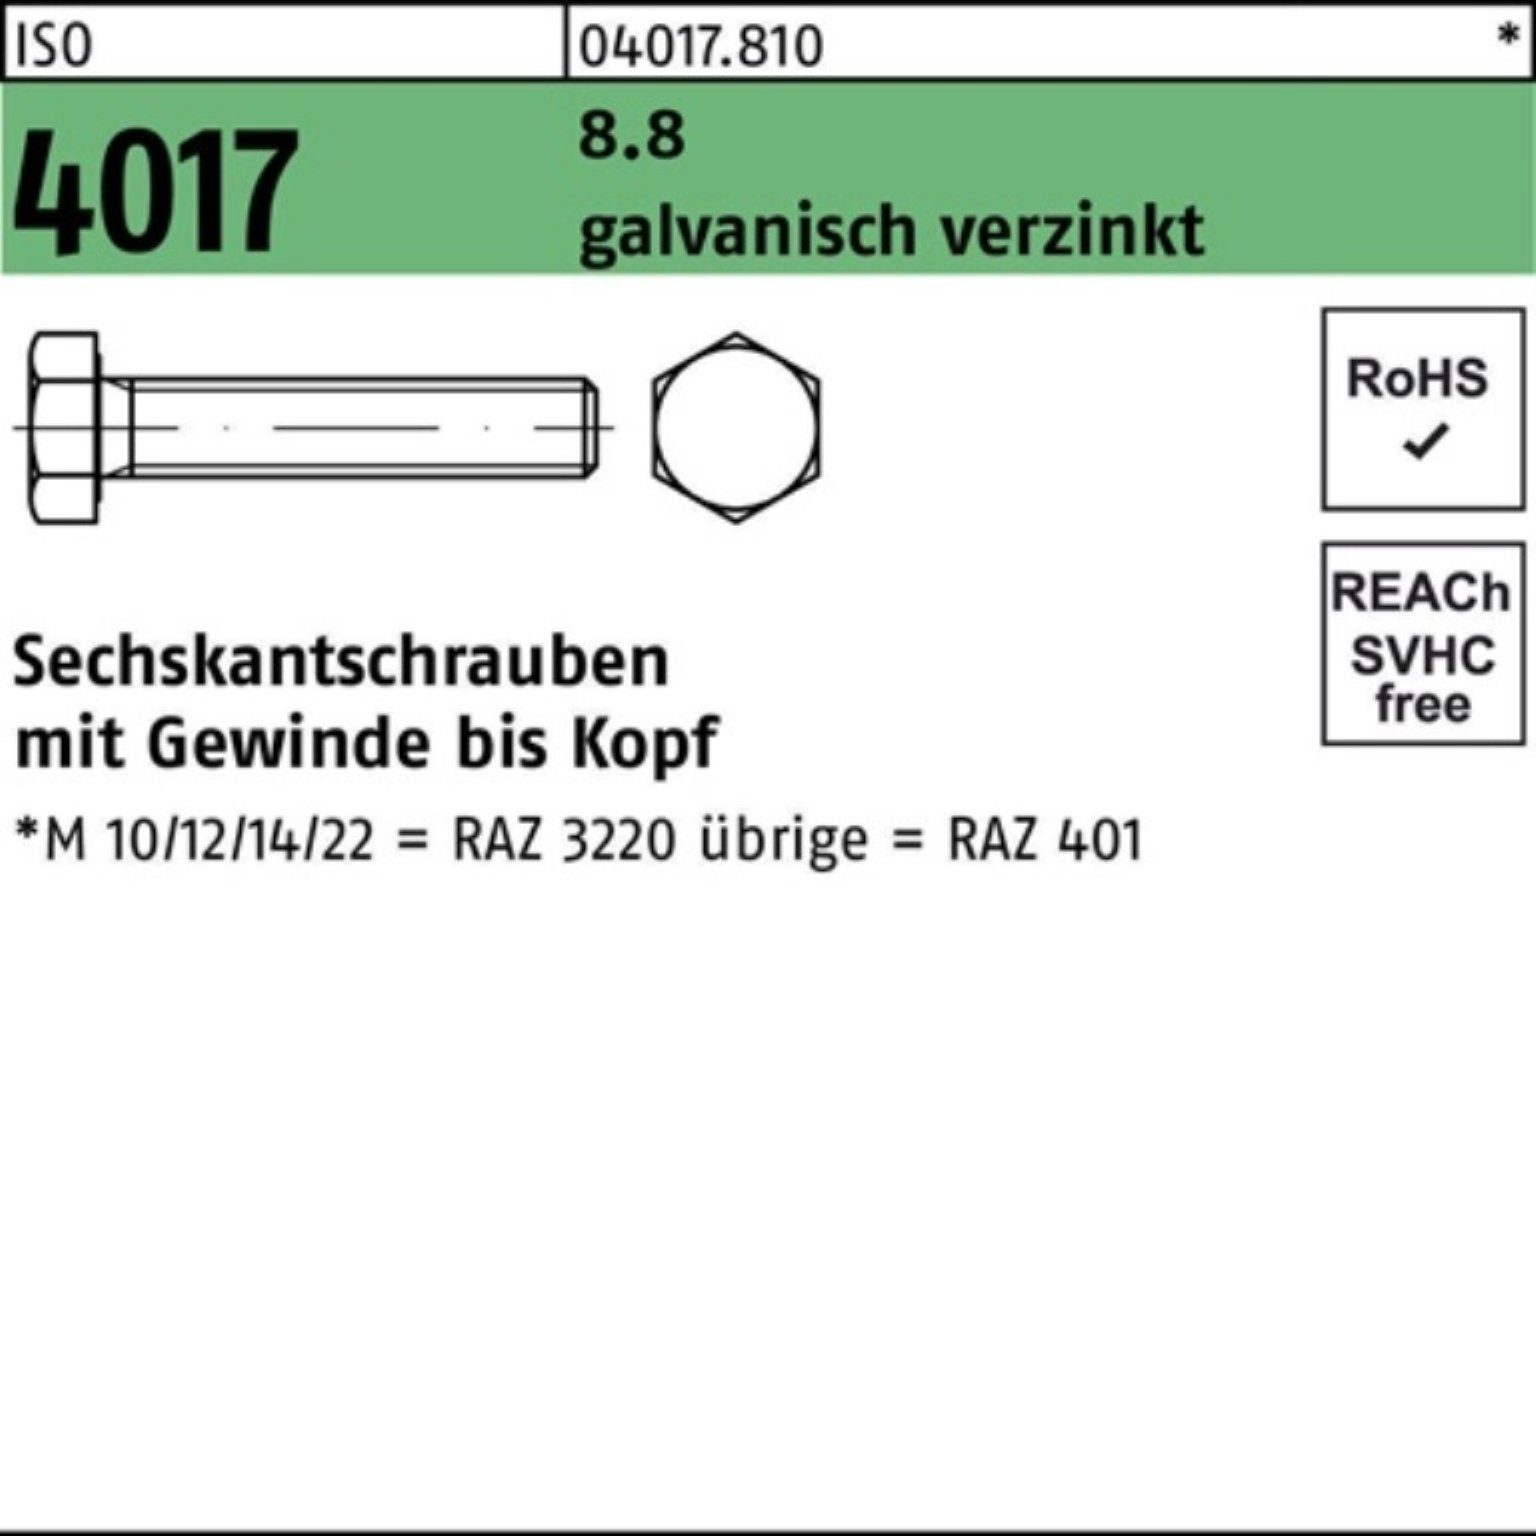 Bufab Sechskantschraube 200er Pack Sechskantschraube 8.8 galv.verz. 200 4017 50 ISO VG M8x St